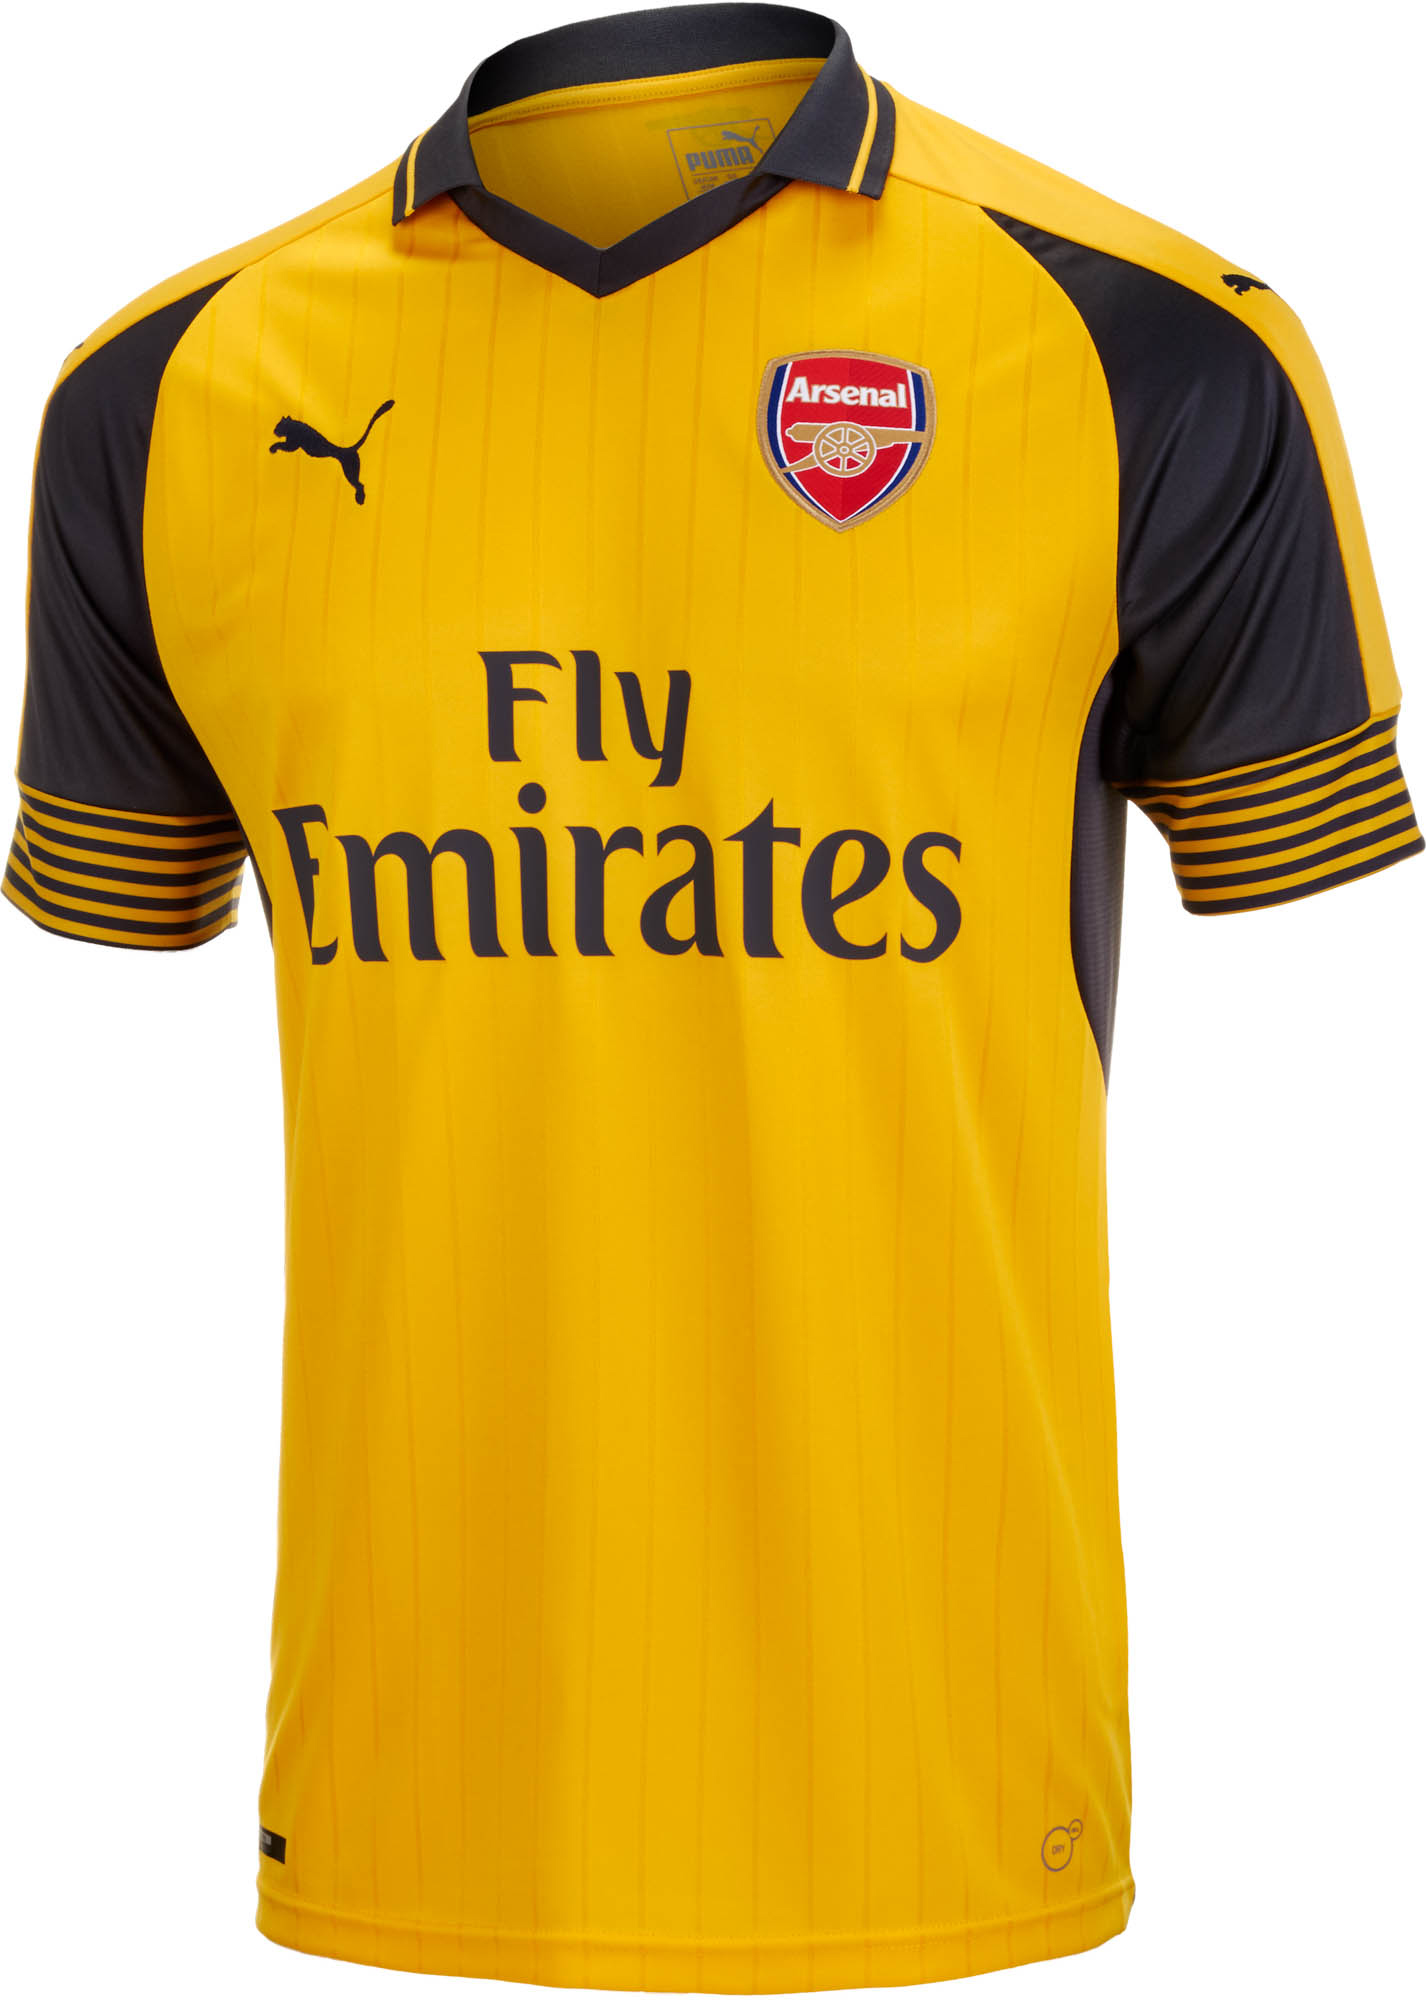 Puma Arsenal Away Jersey - 2016 Arsenal Soccer Jerseys